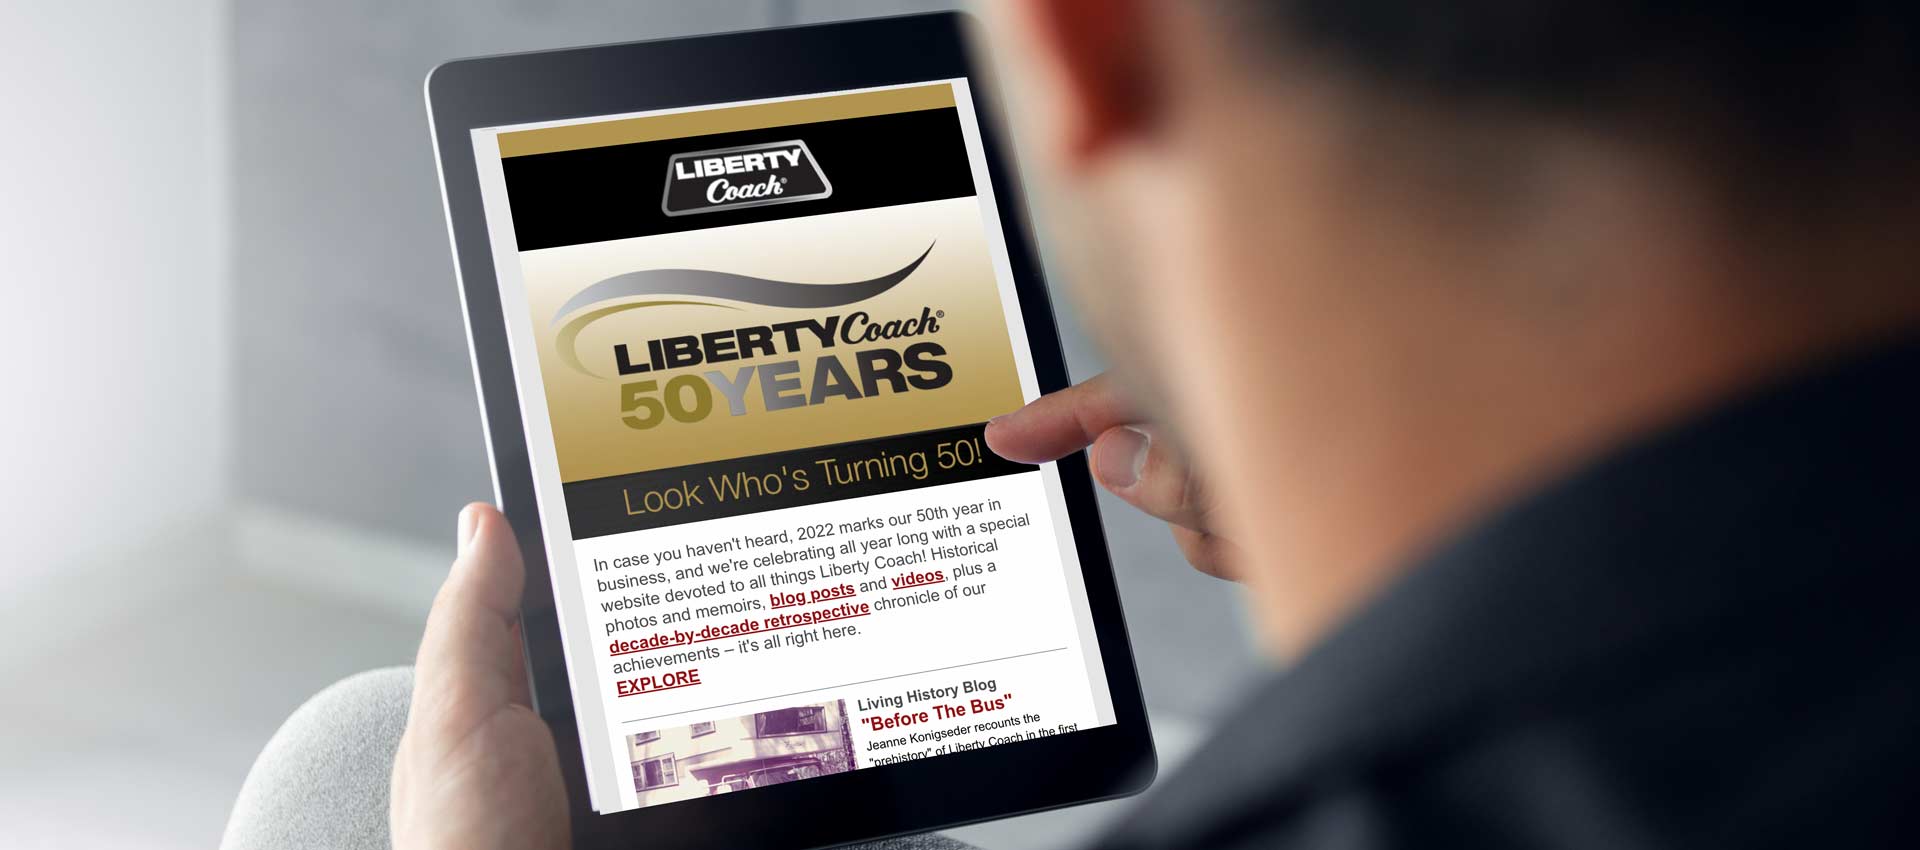 iPad displaying Liberty Coach 50 Year page